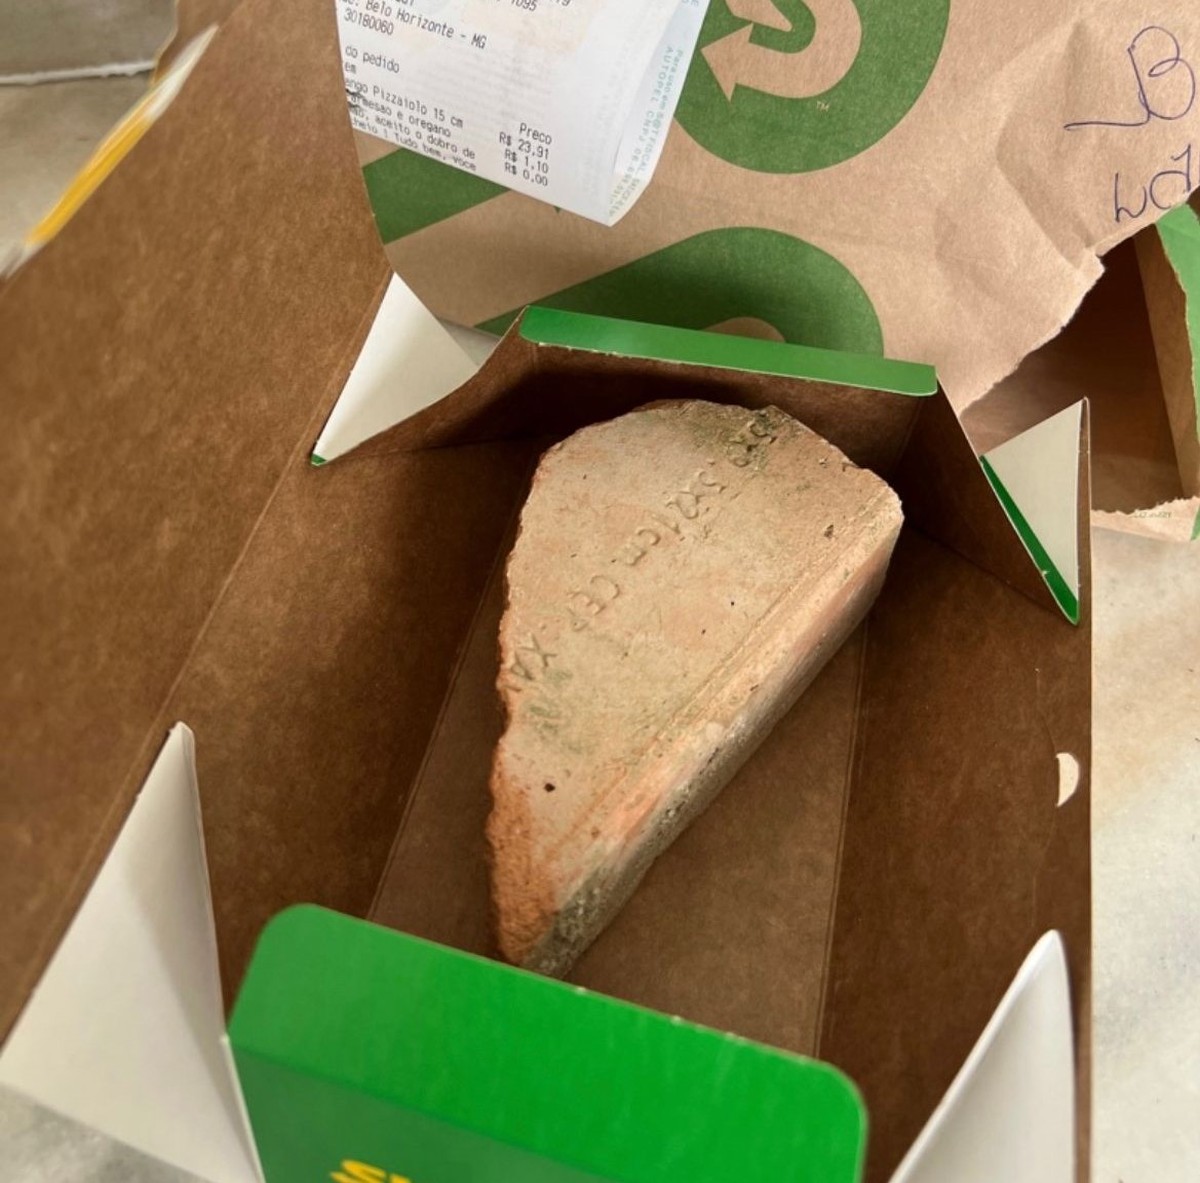 Subway doa 25 mil sanduíches para comunidades e profissionais da